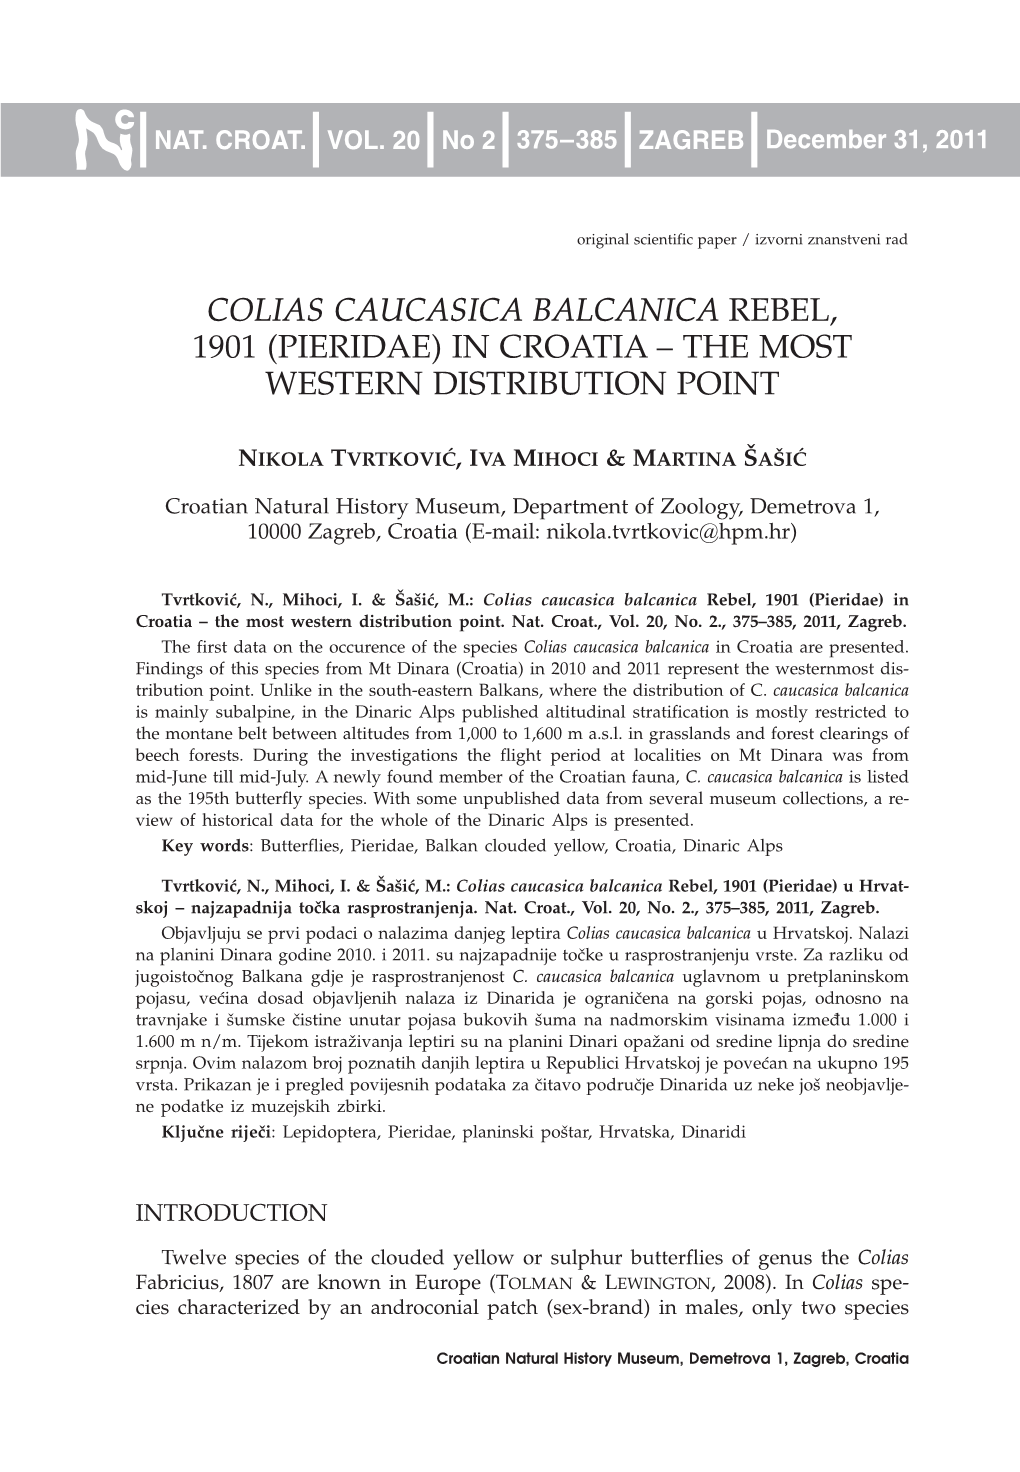 Colias Caucasica Balcanica Rebel, 1901 (Pieridae) in Croatia – the Most Western Distribution Point